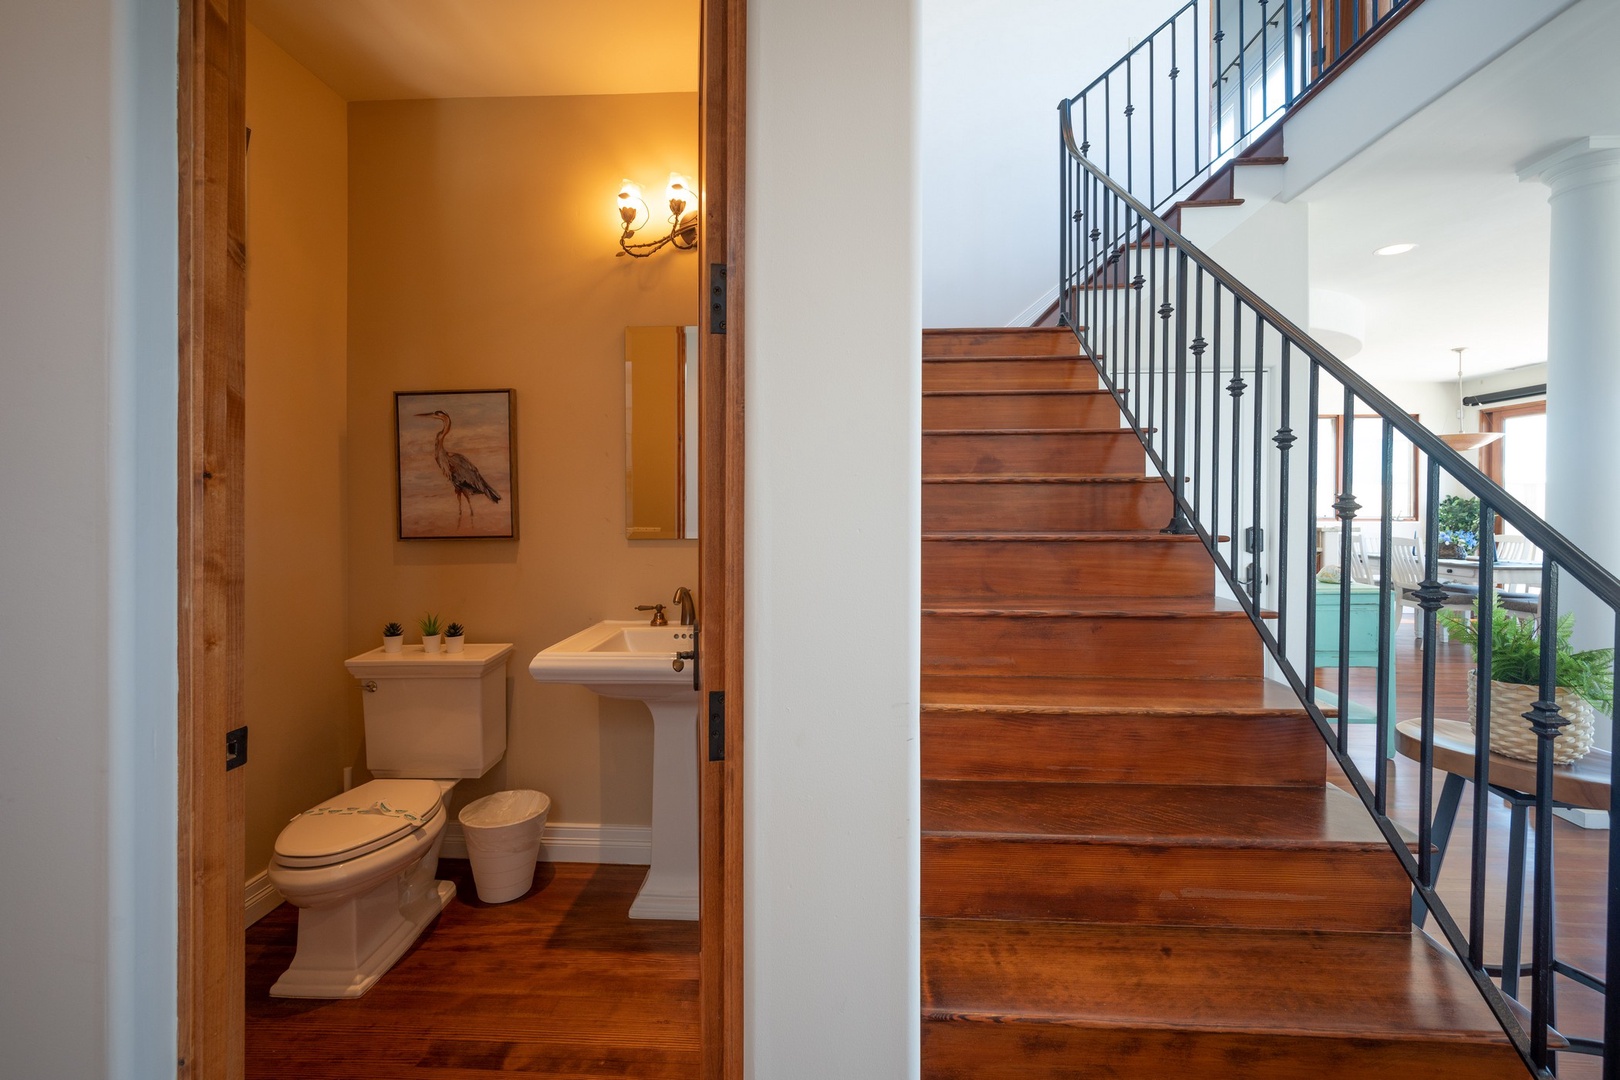 Hall bathroom adjacent to staircase